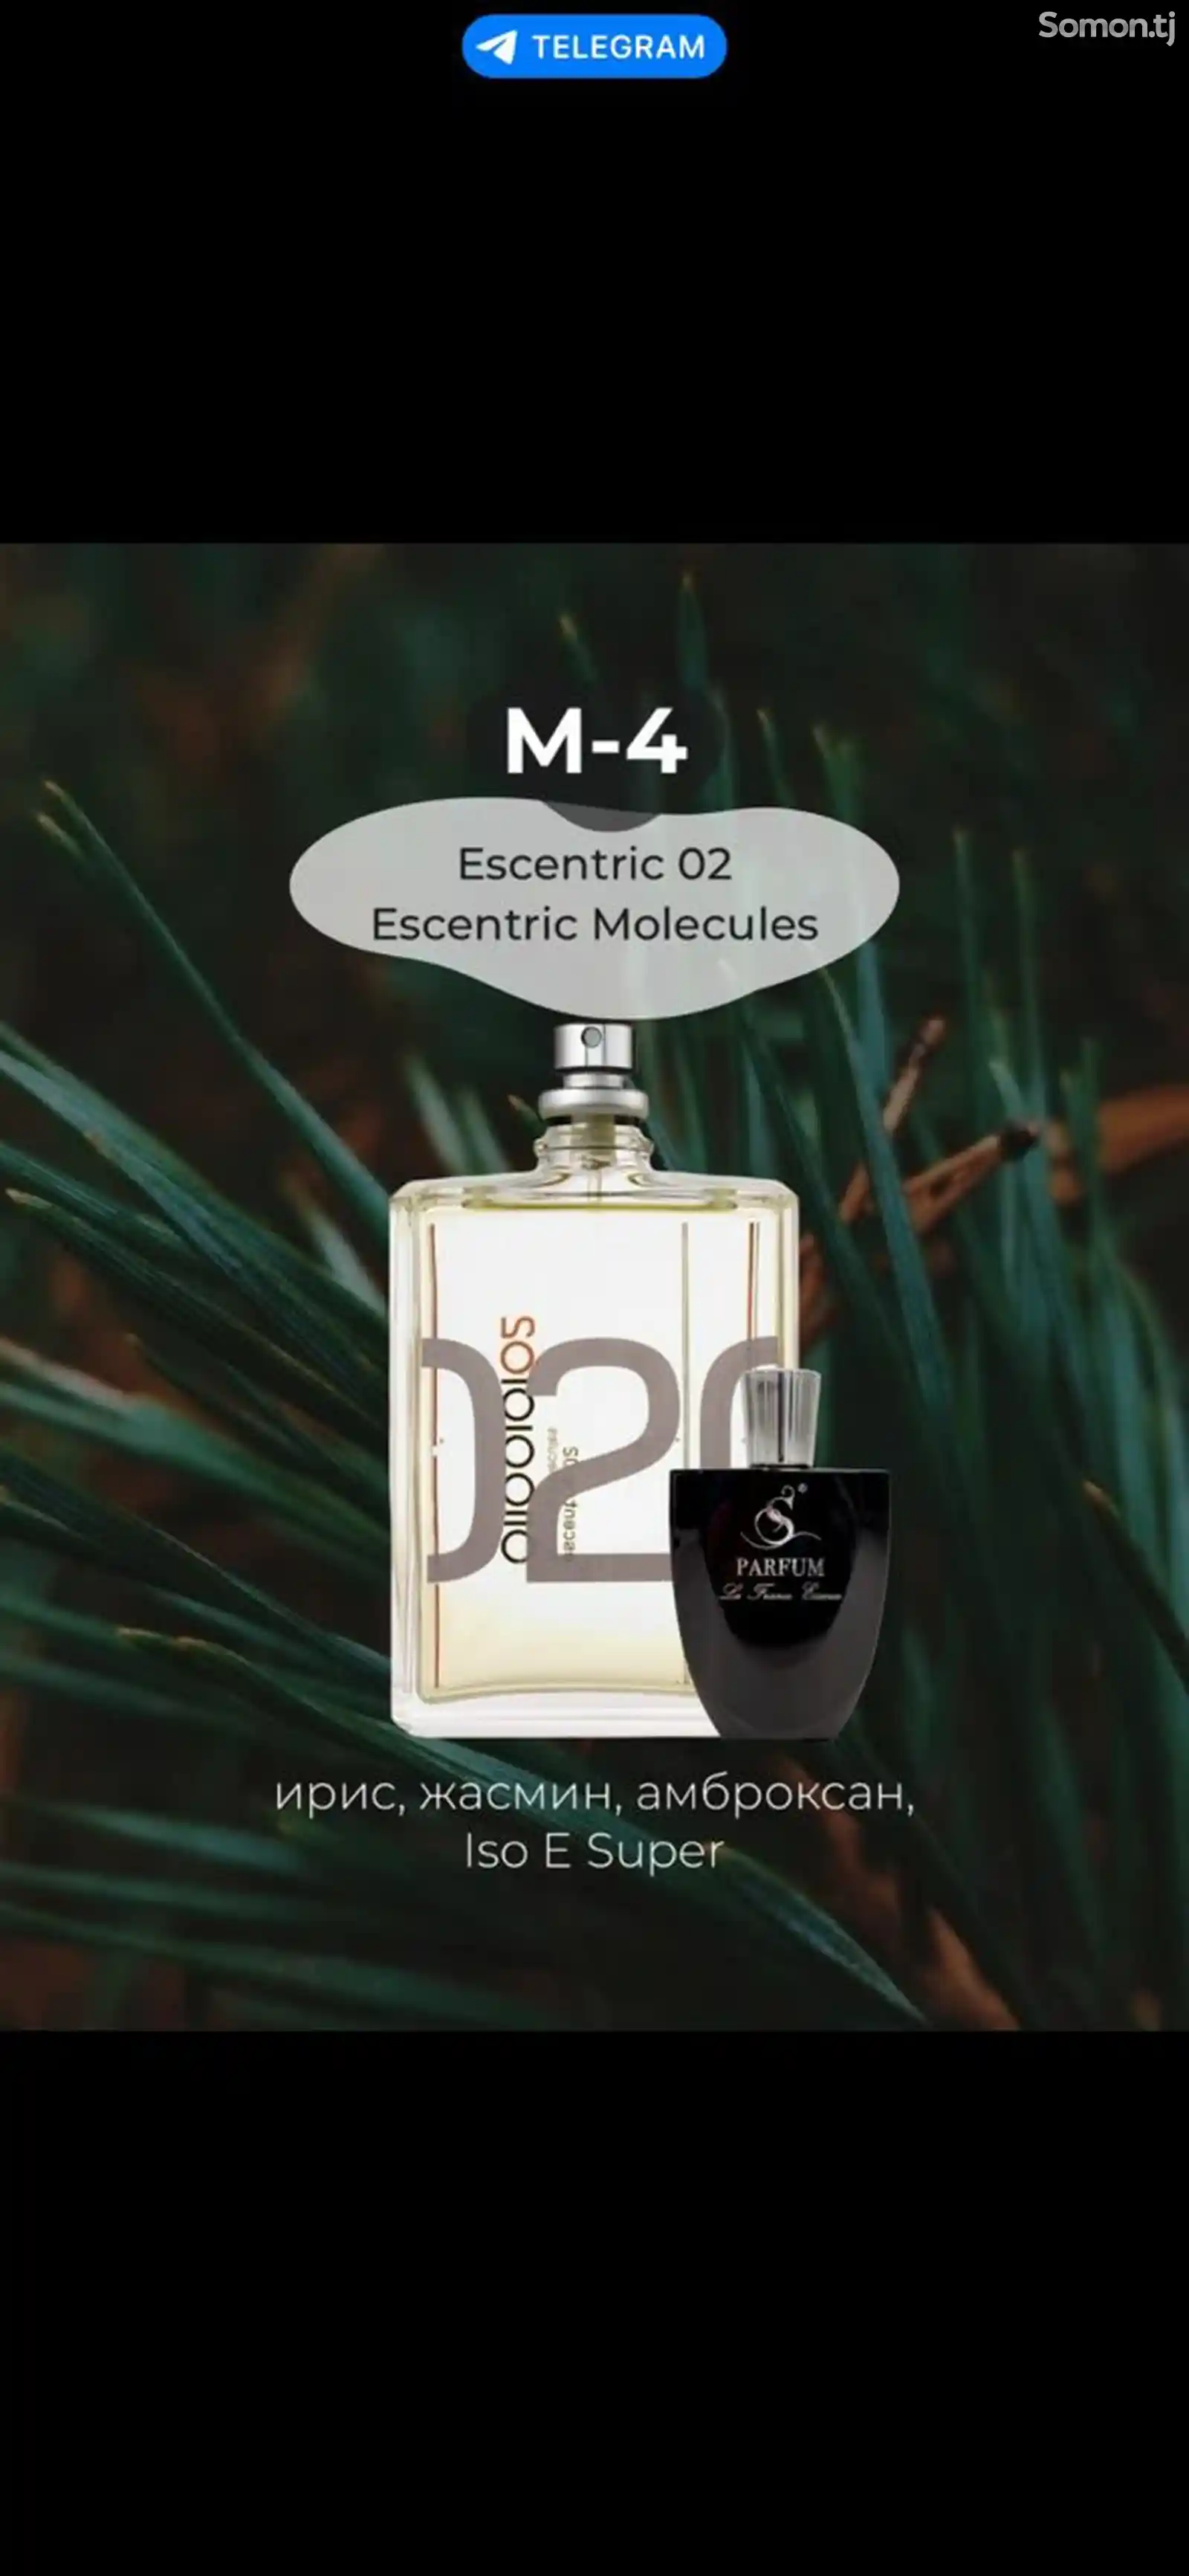 S-Parfum M4 Escentric Molecules Molecule 02. 100mg